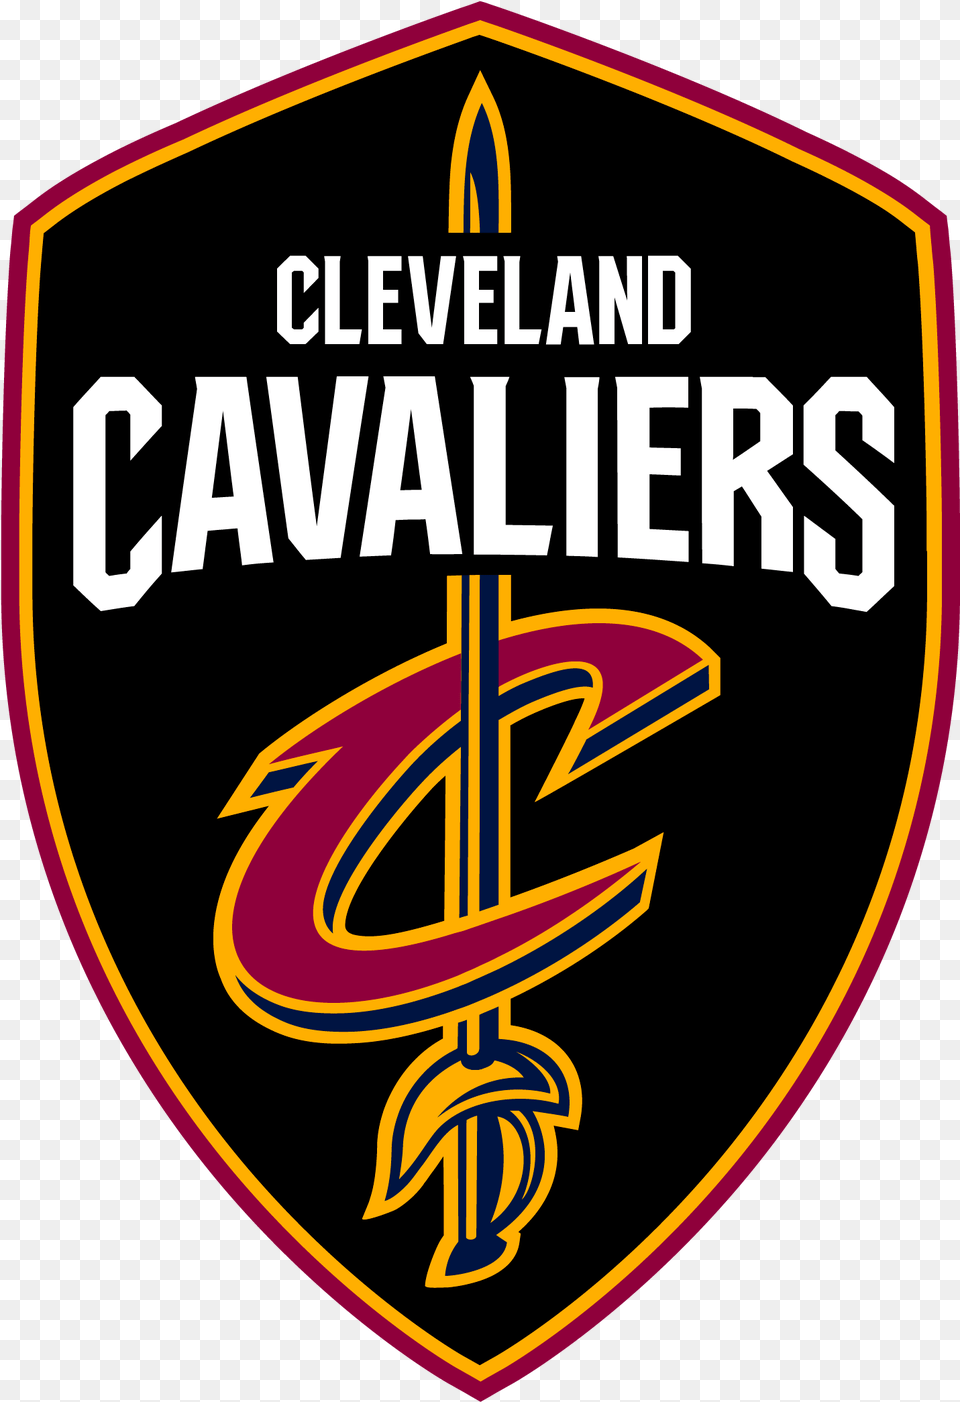 Cleveland Cavaliers Logos Cleveland Cavaliers Logo, Emblem, Symbol Png Image